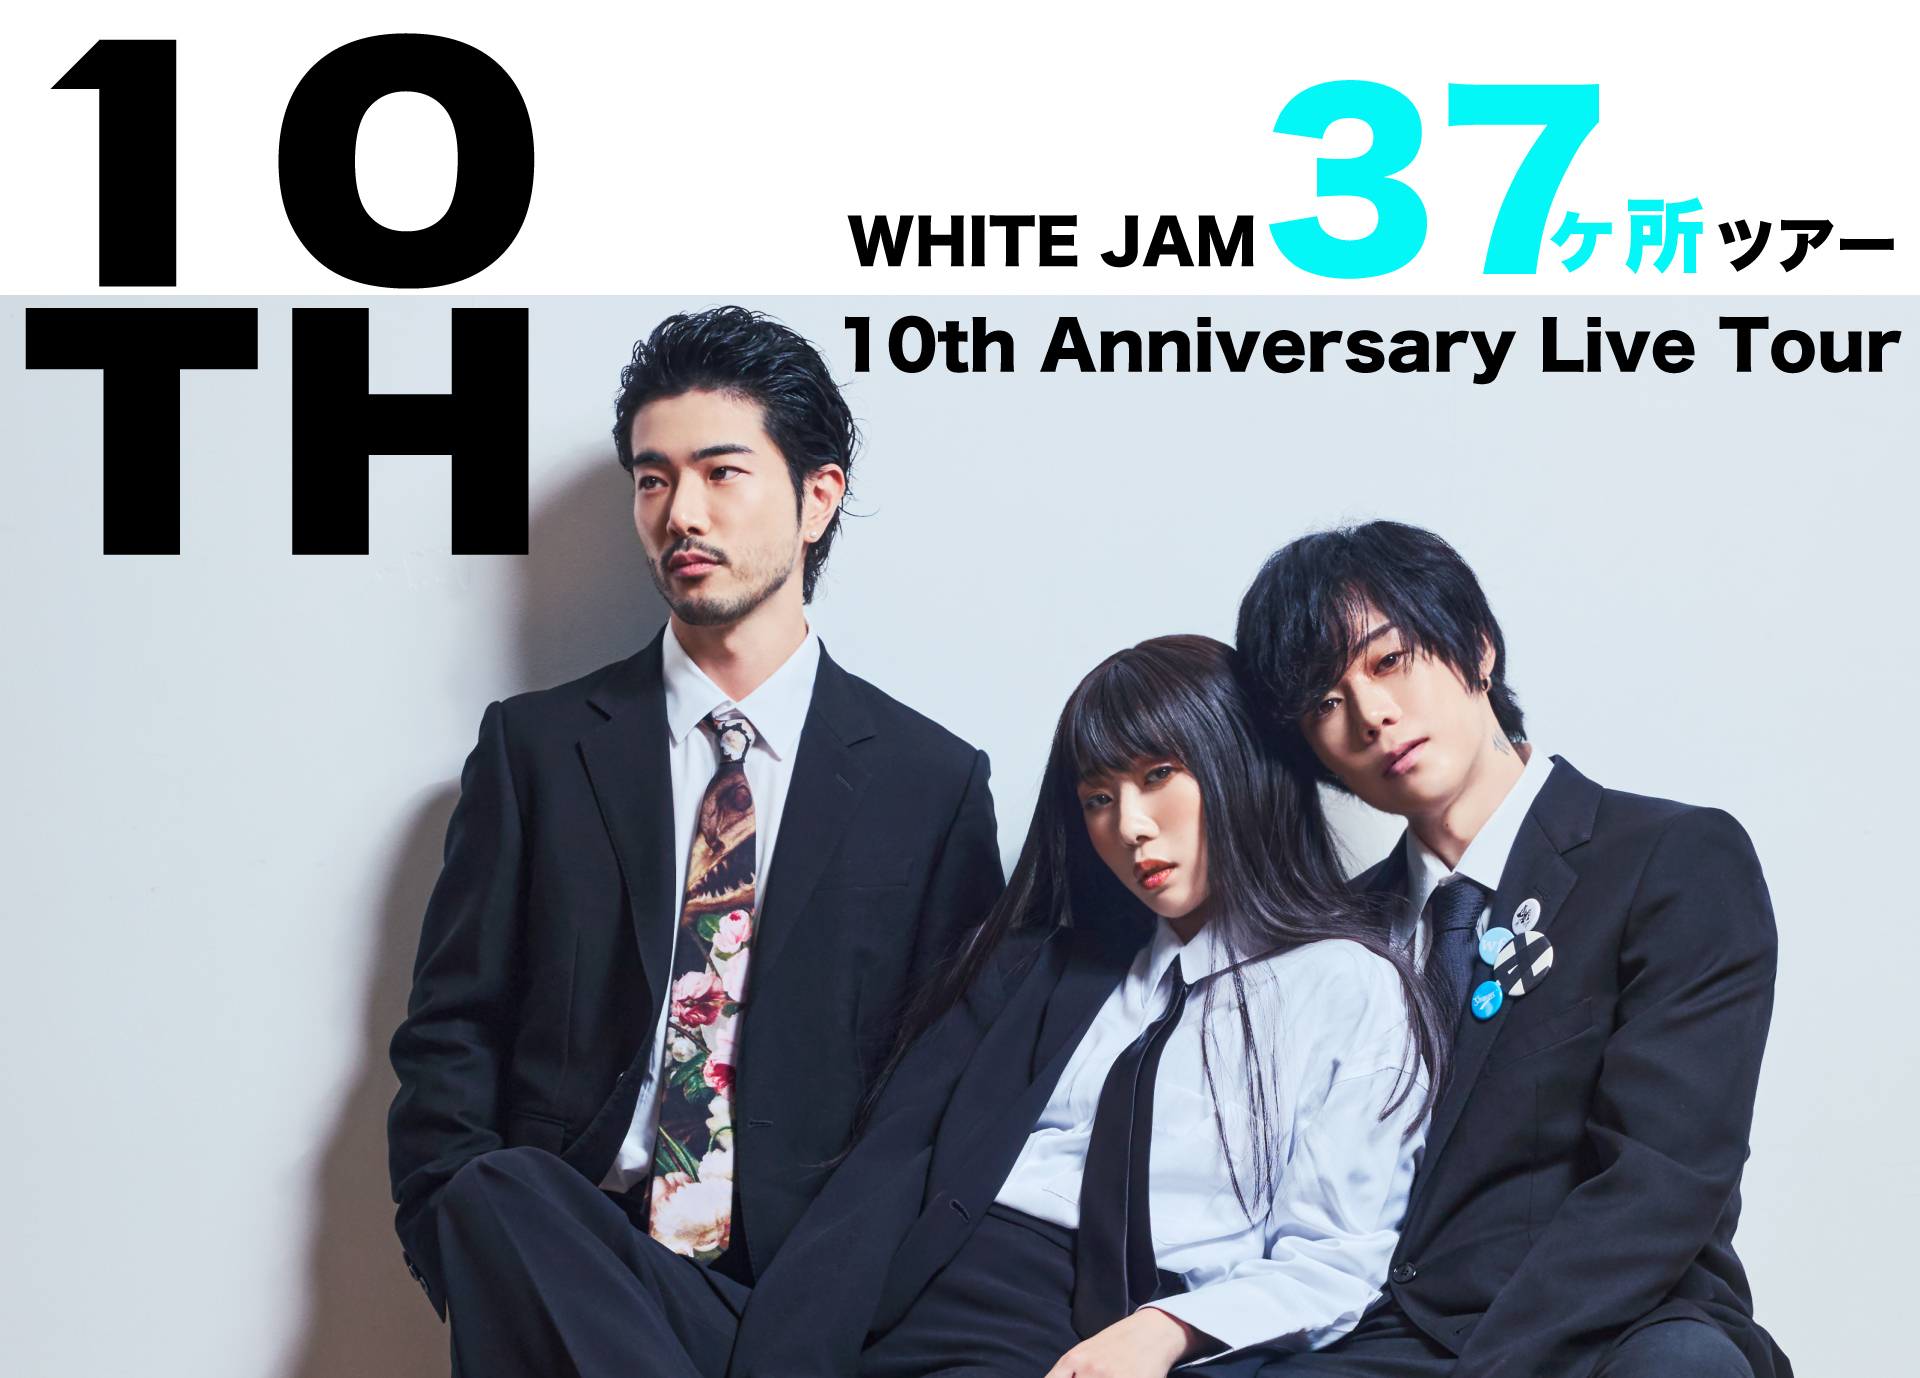 WHITE JAM 37ヶ所ツアー ～10th Anniversary Live Tour～奈良公演 